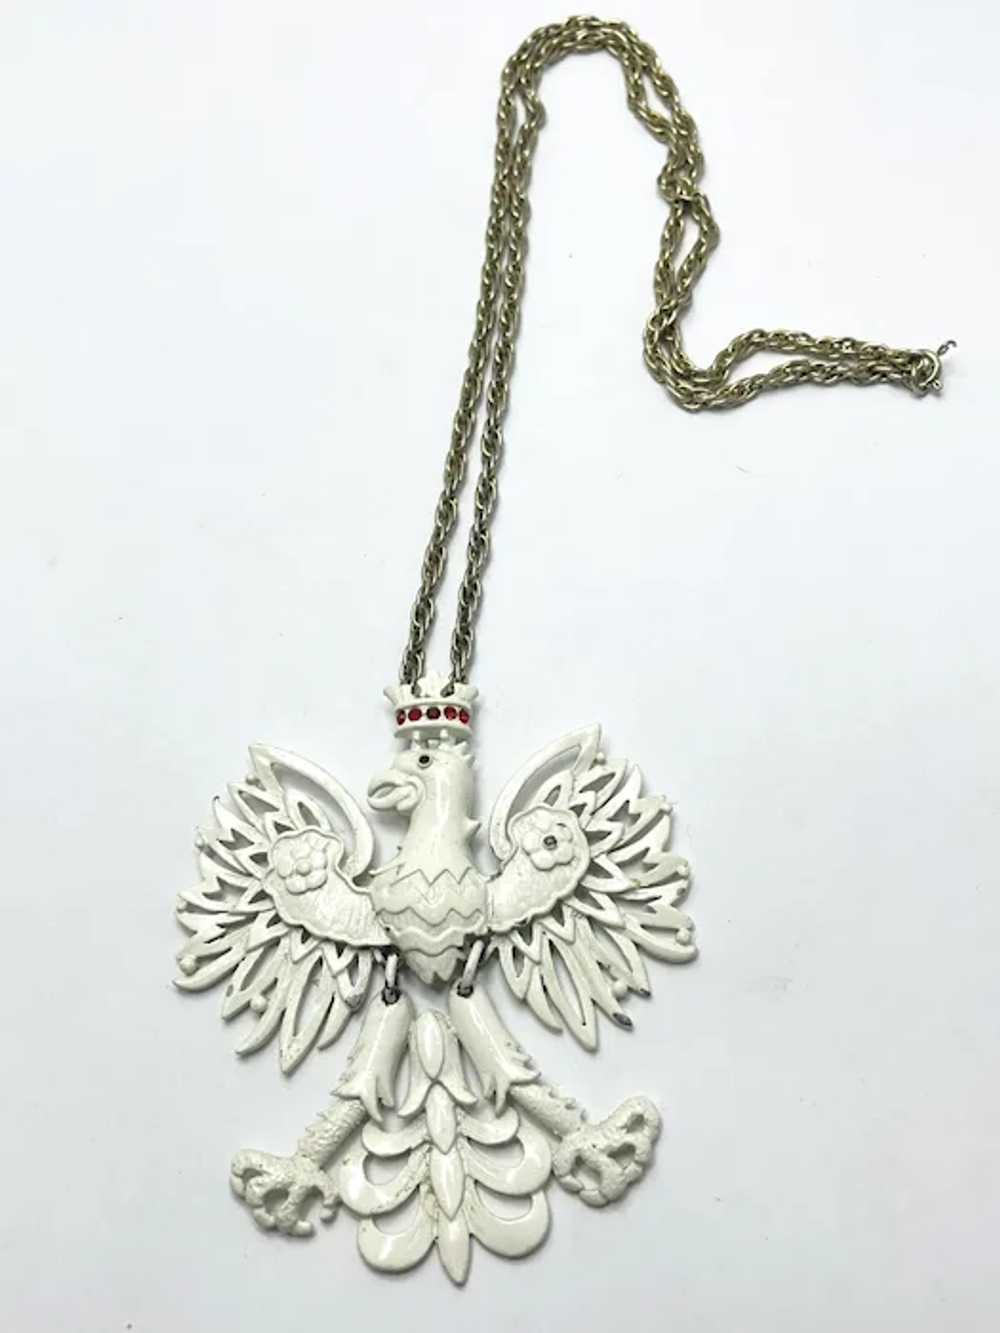 Vintage White Enamel Eagle Pendant Necklace - image 5